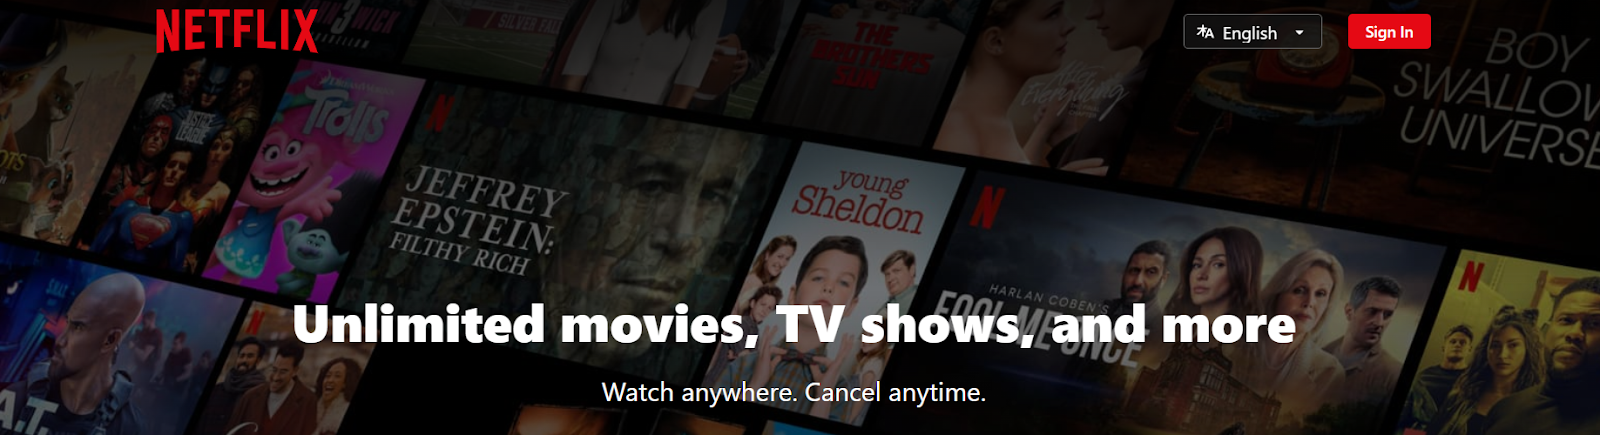 The Netflix homepage